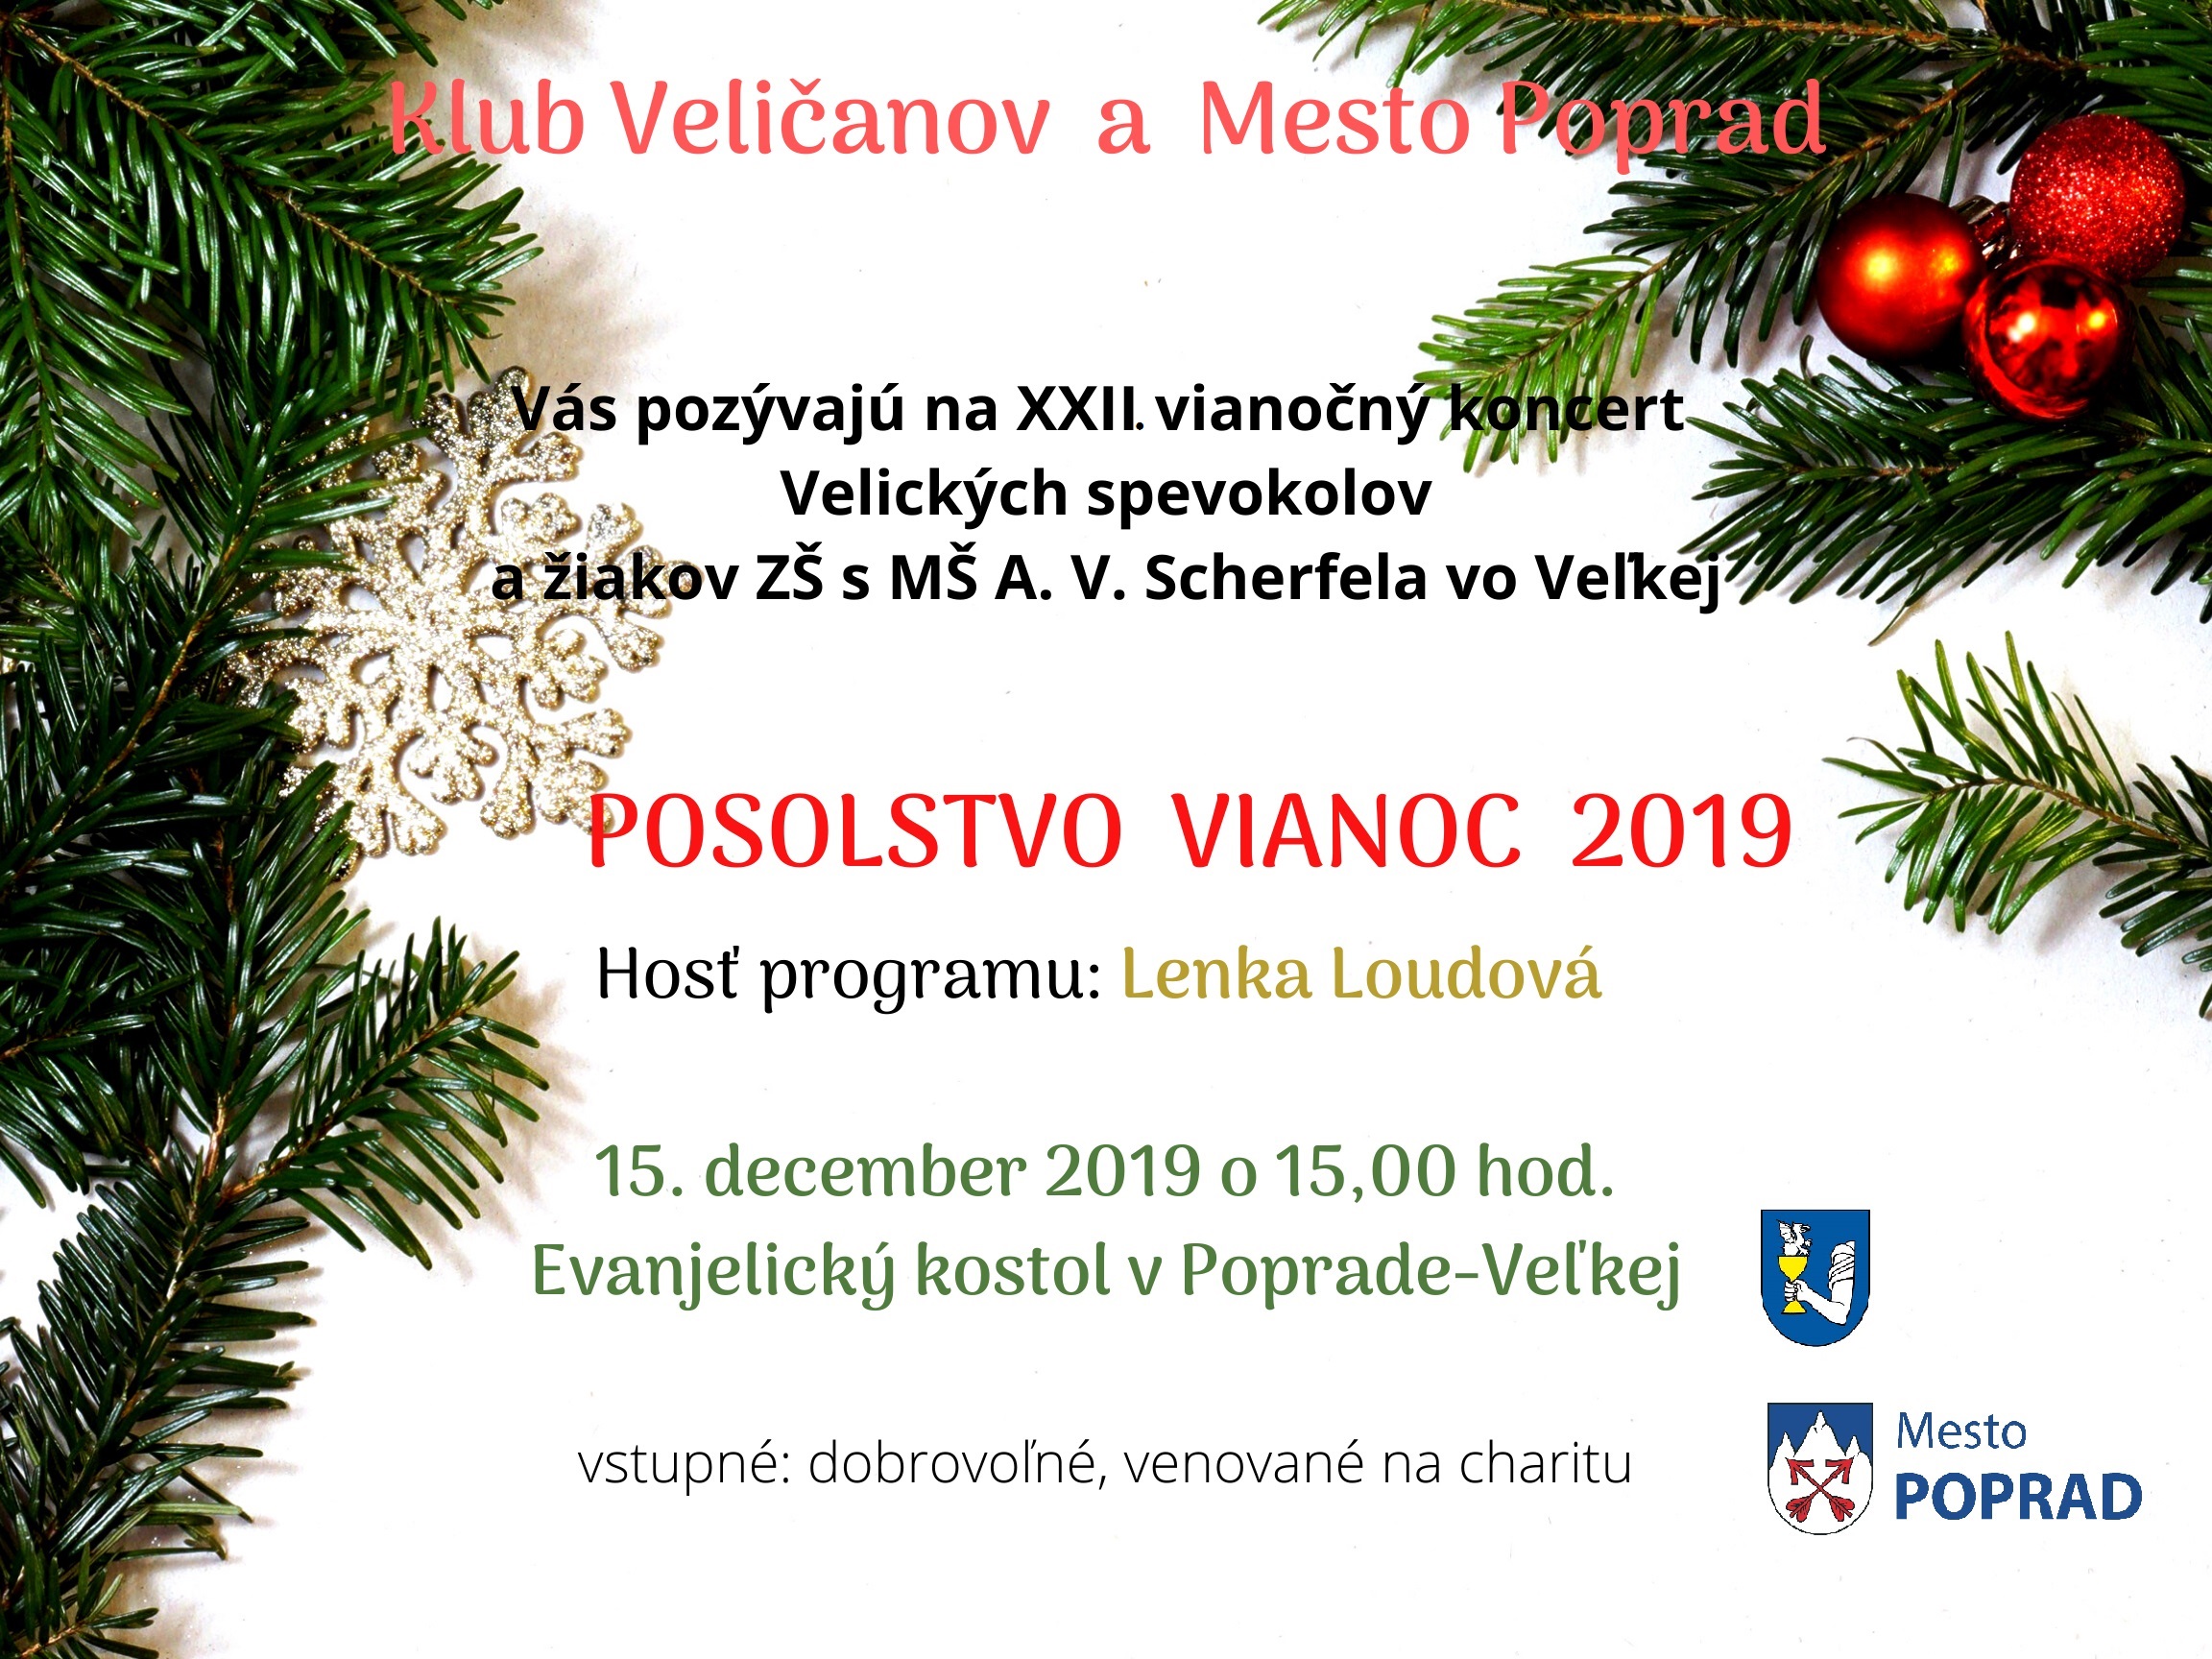 Posolstvo Vianoc 2019 Poprad - XXII. Vianon koncert 